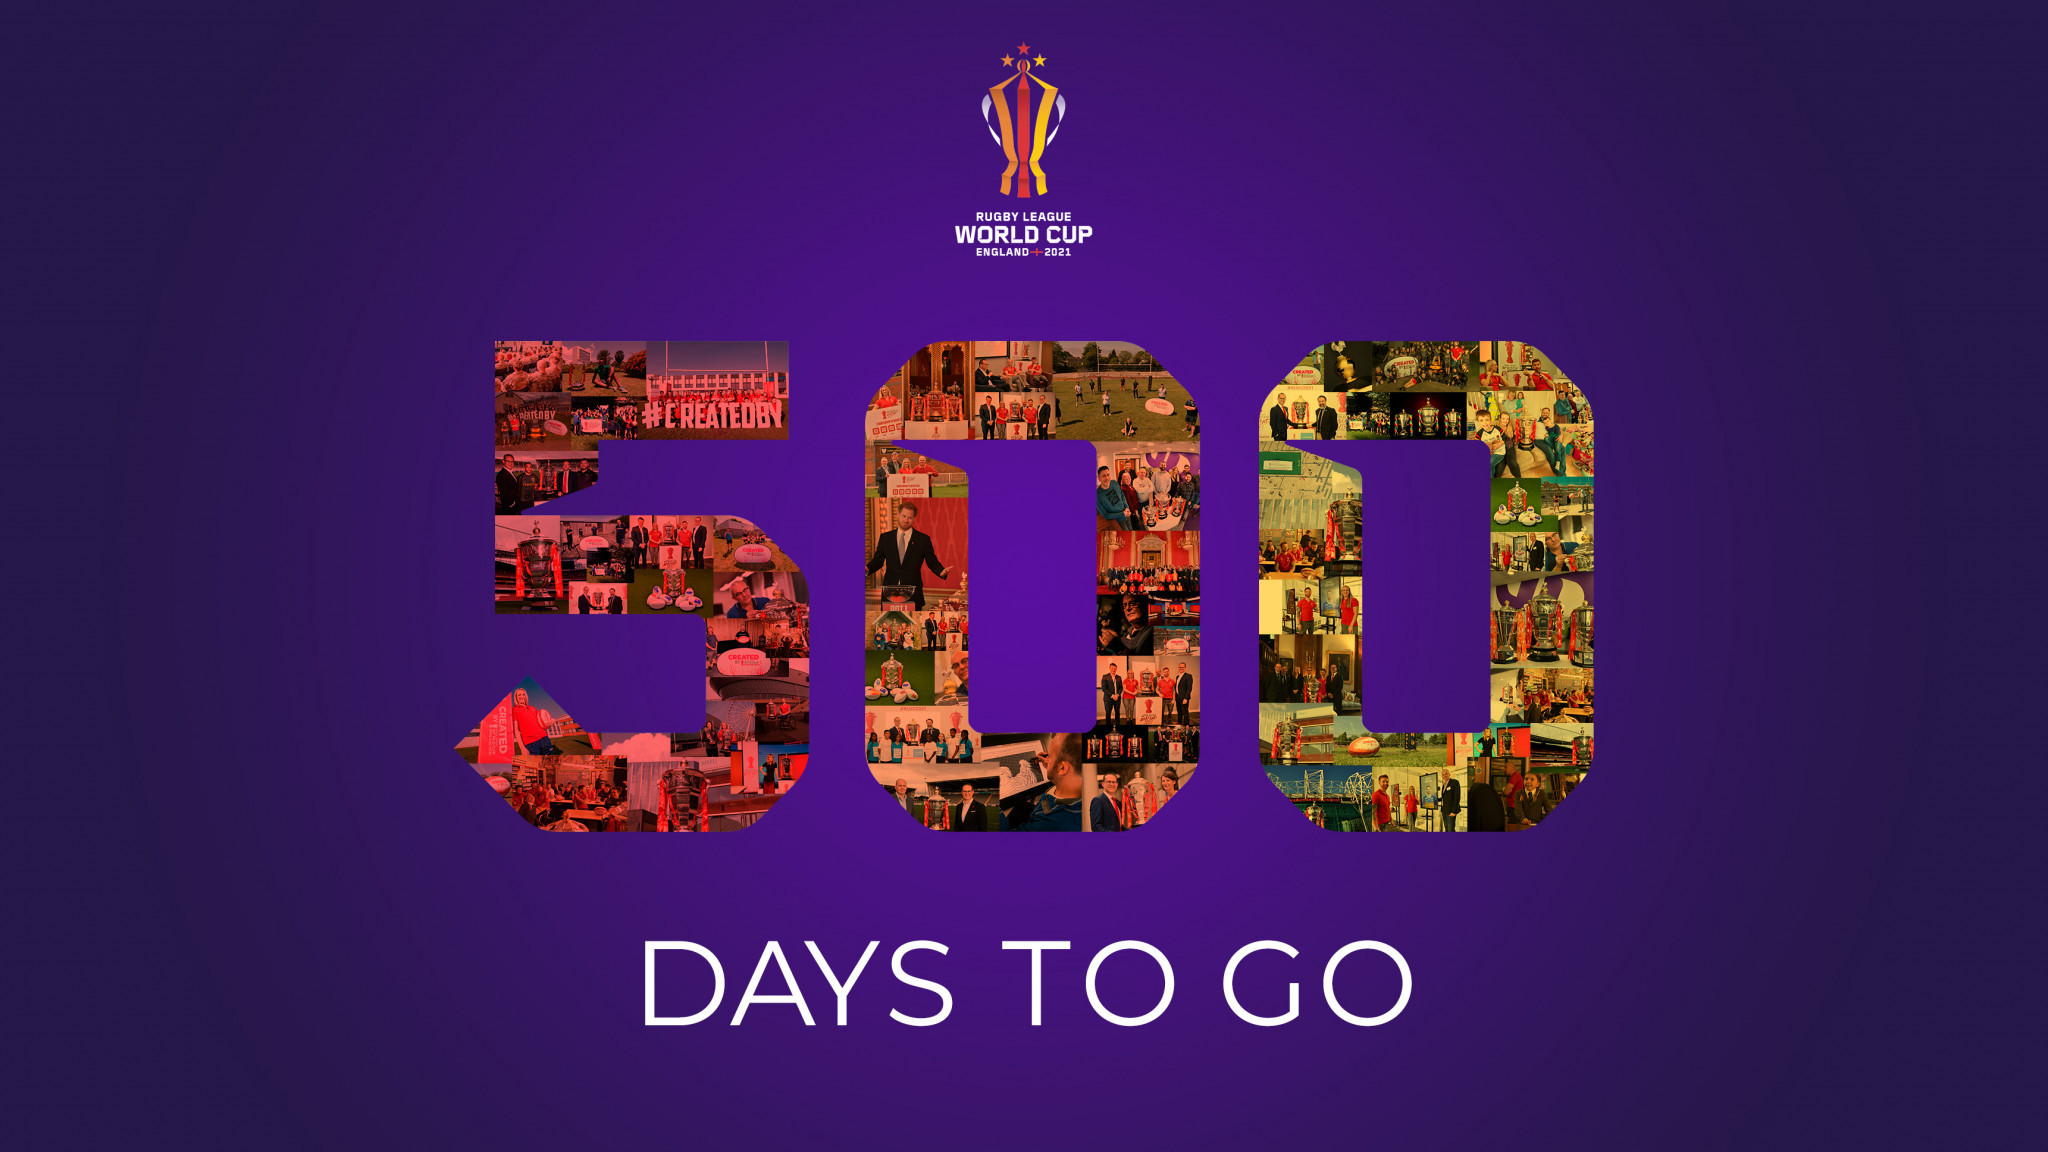 Organisers unveiled the logo to mark the 500 days to go milestone ©RLWC2021